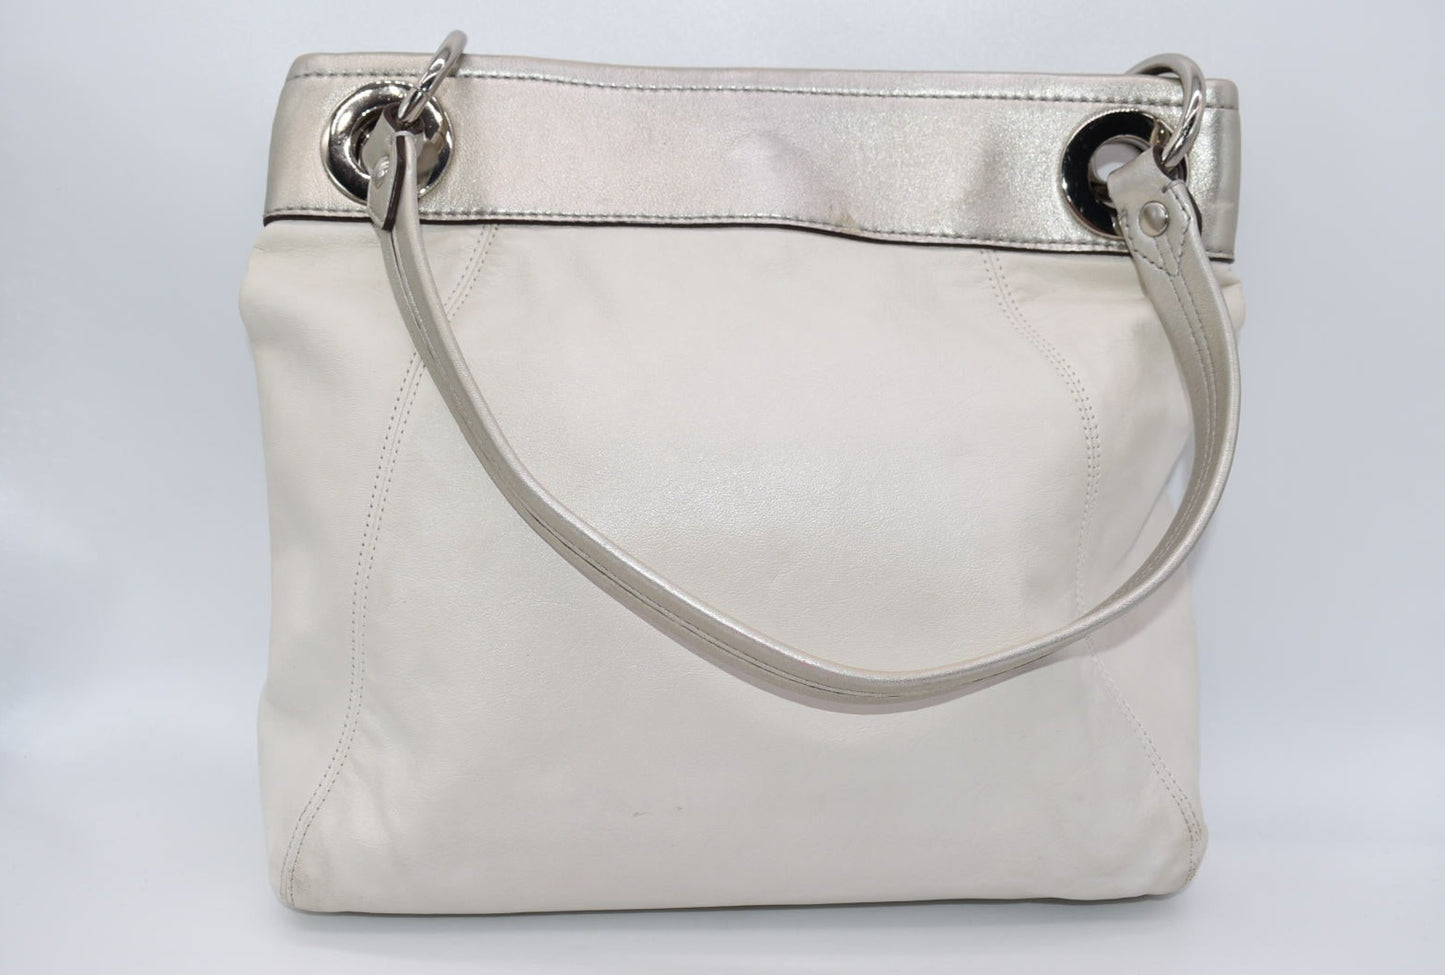 COACH Ashley F17605 Shoulder Bag in "White & Silver"